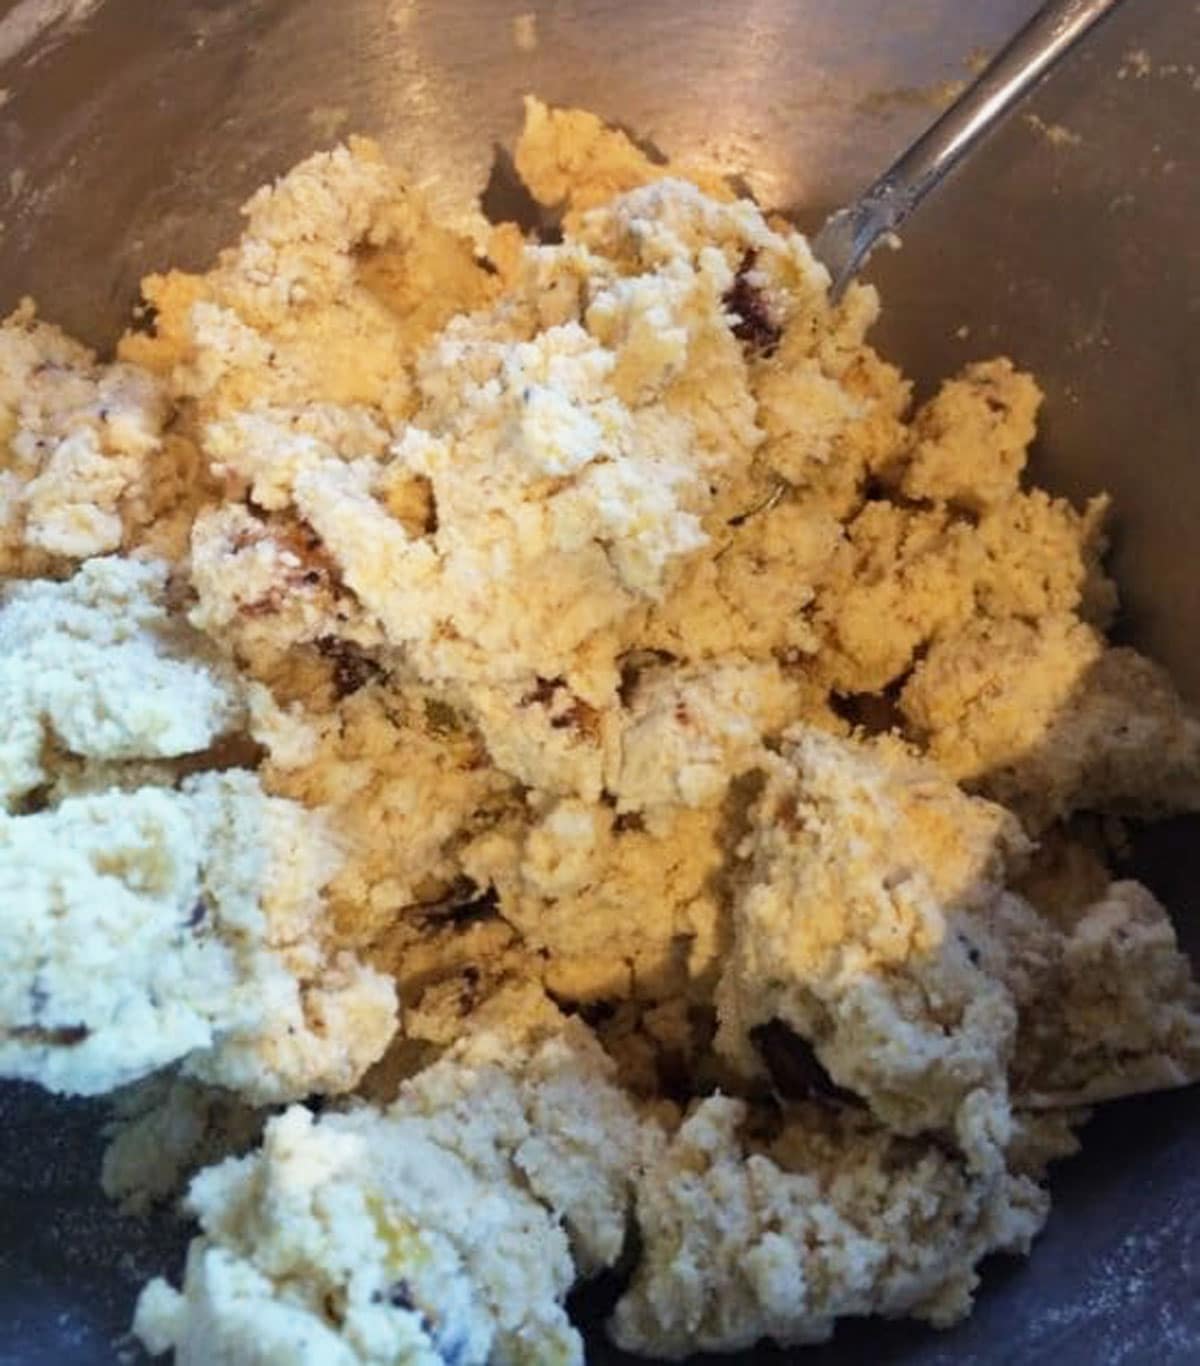 Cornmeal scones dough in a metal mixing bowl.